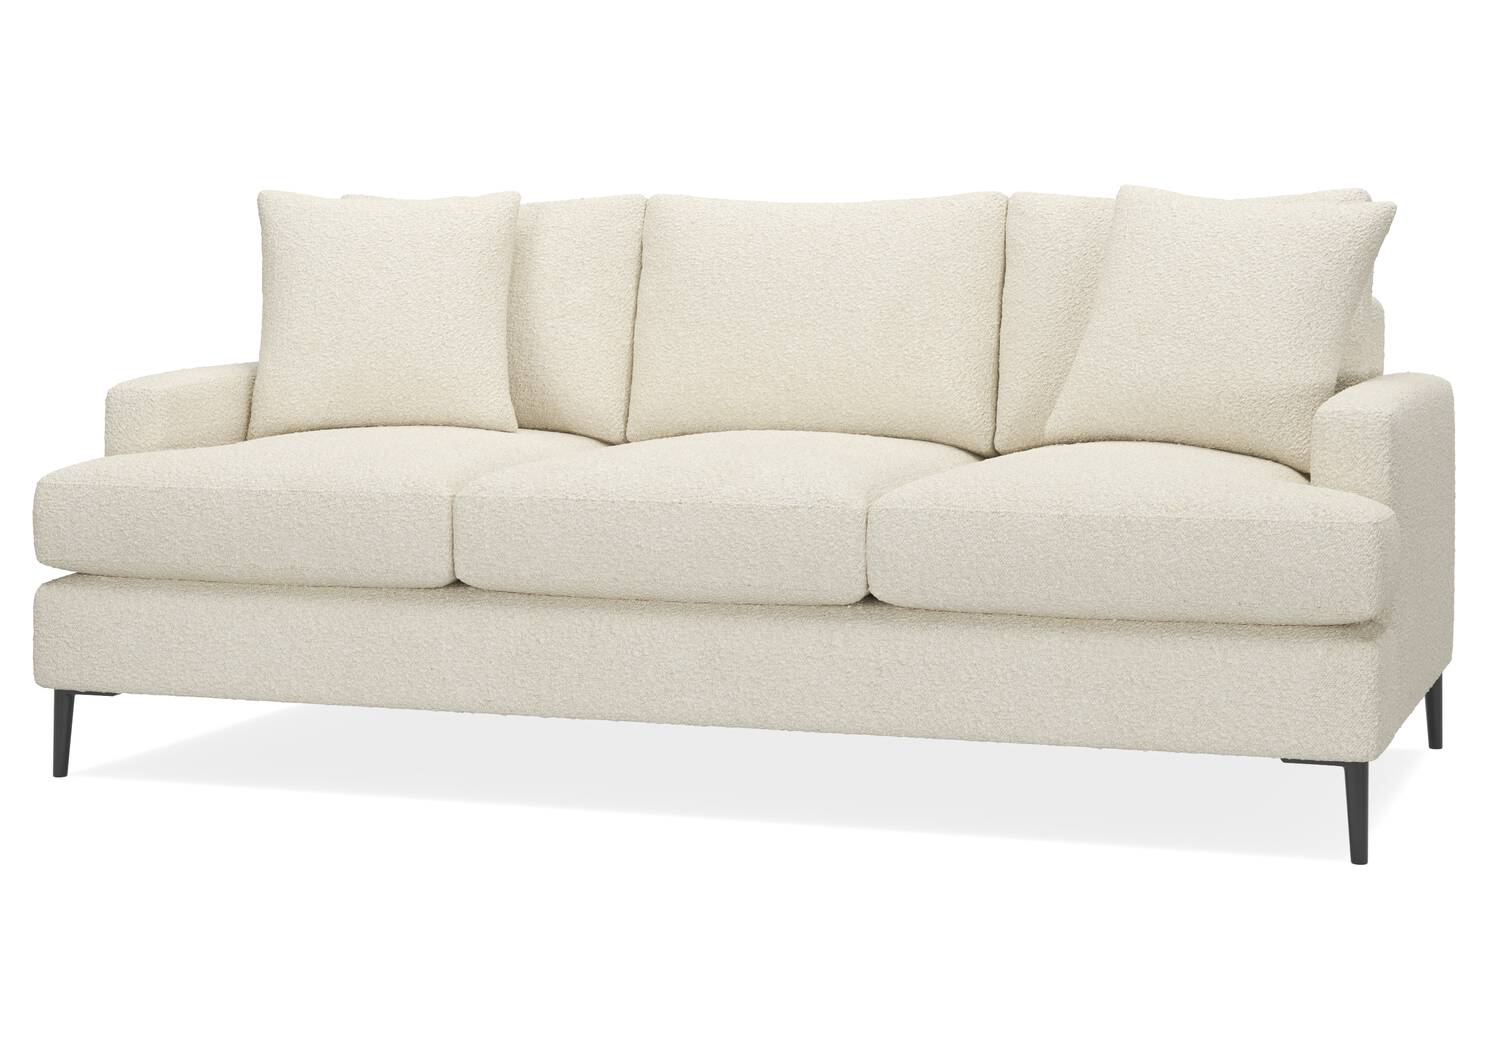 Ramos Custom Sofa